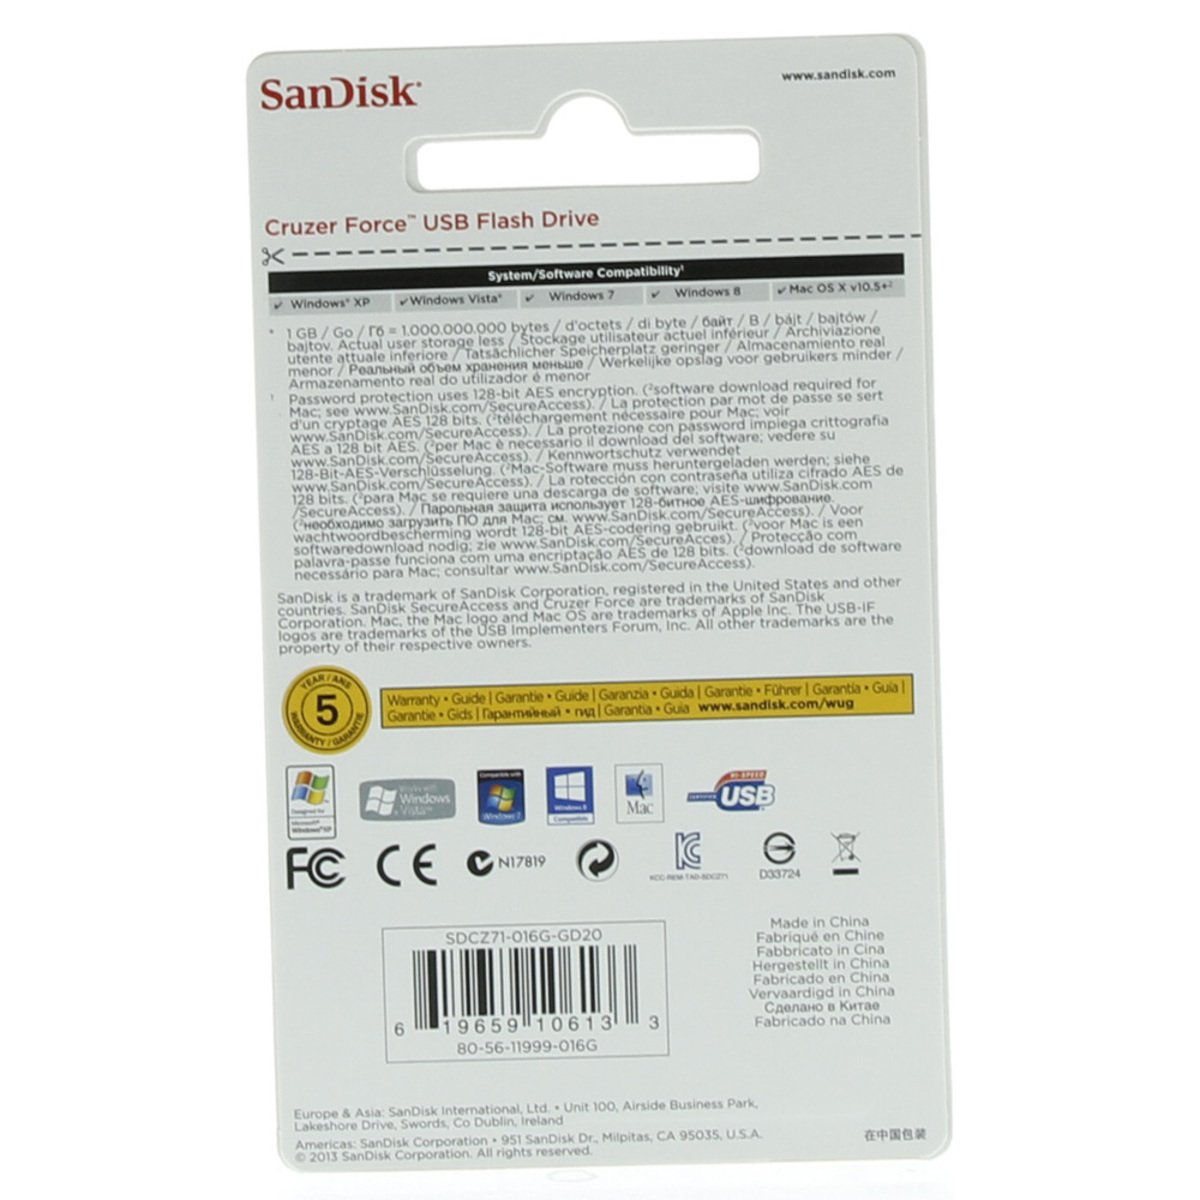 Sandisk FlashDrive CruzerForceSDCZ71 16GB